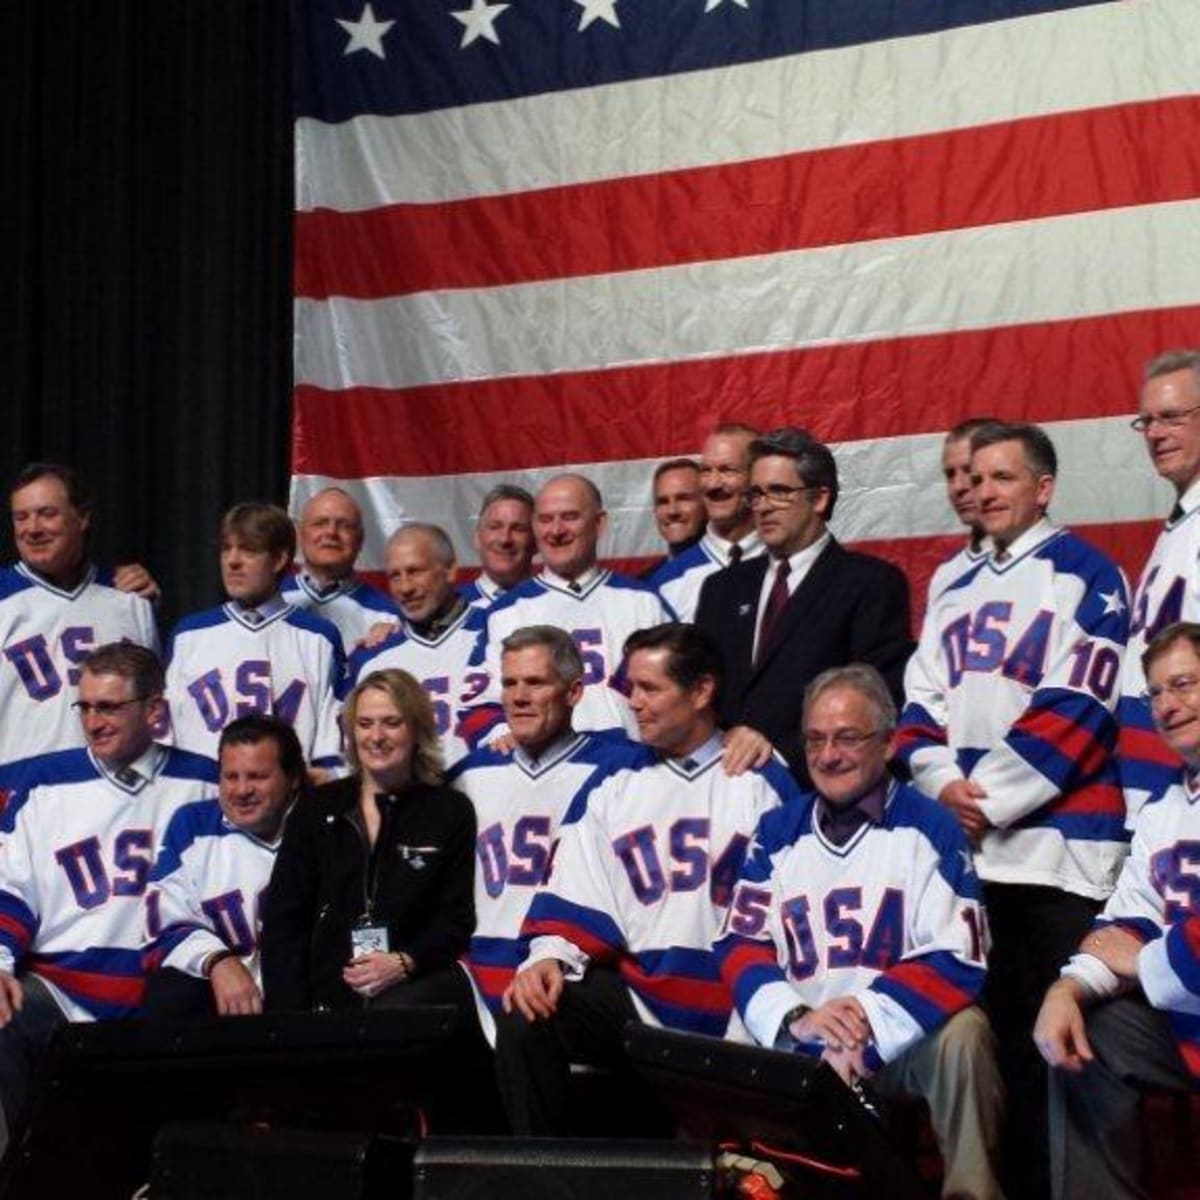 1980 Miracle On Ice Team USA Steve Christoff 11 Hockey Jersey